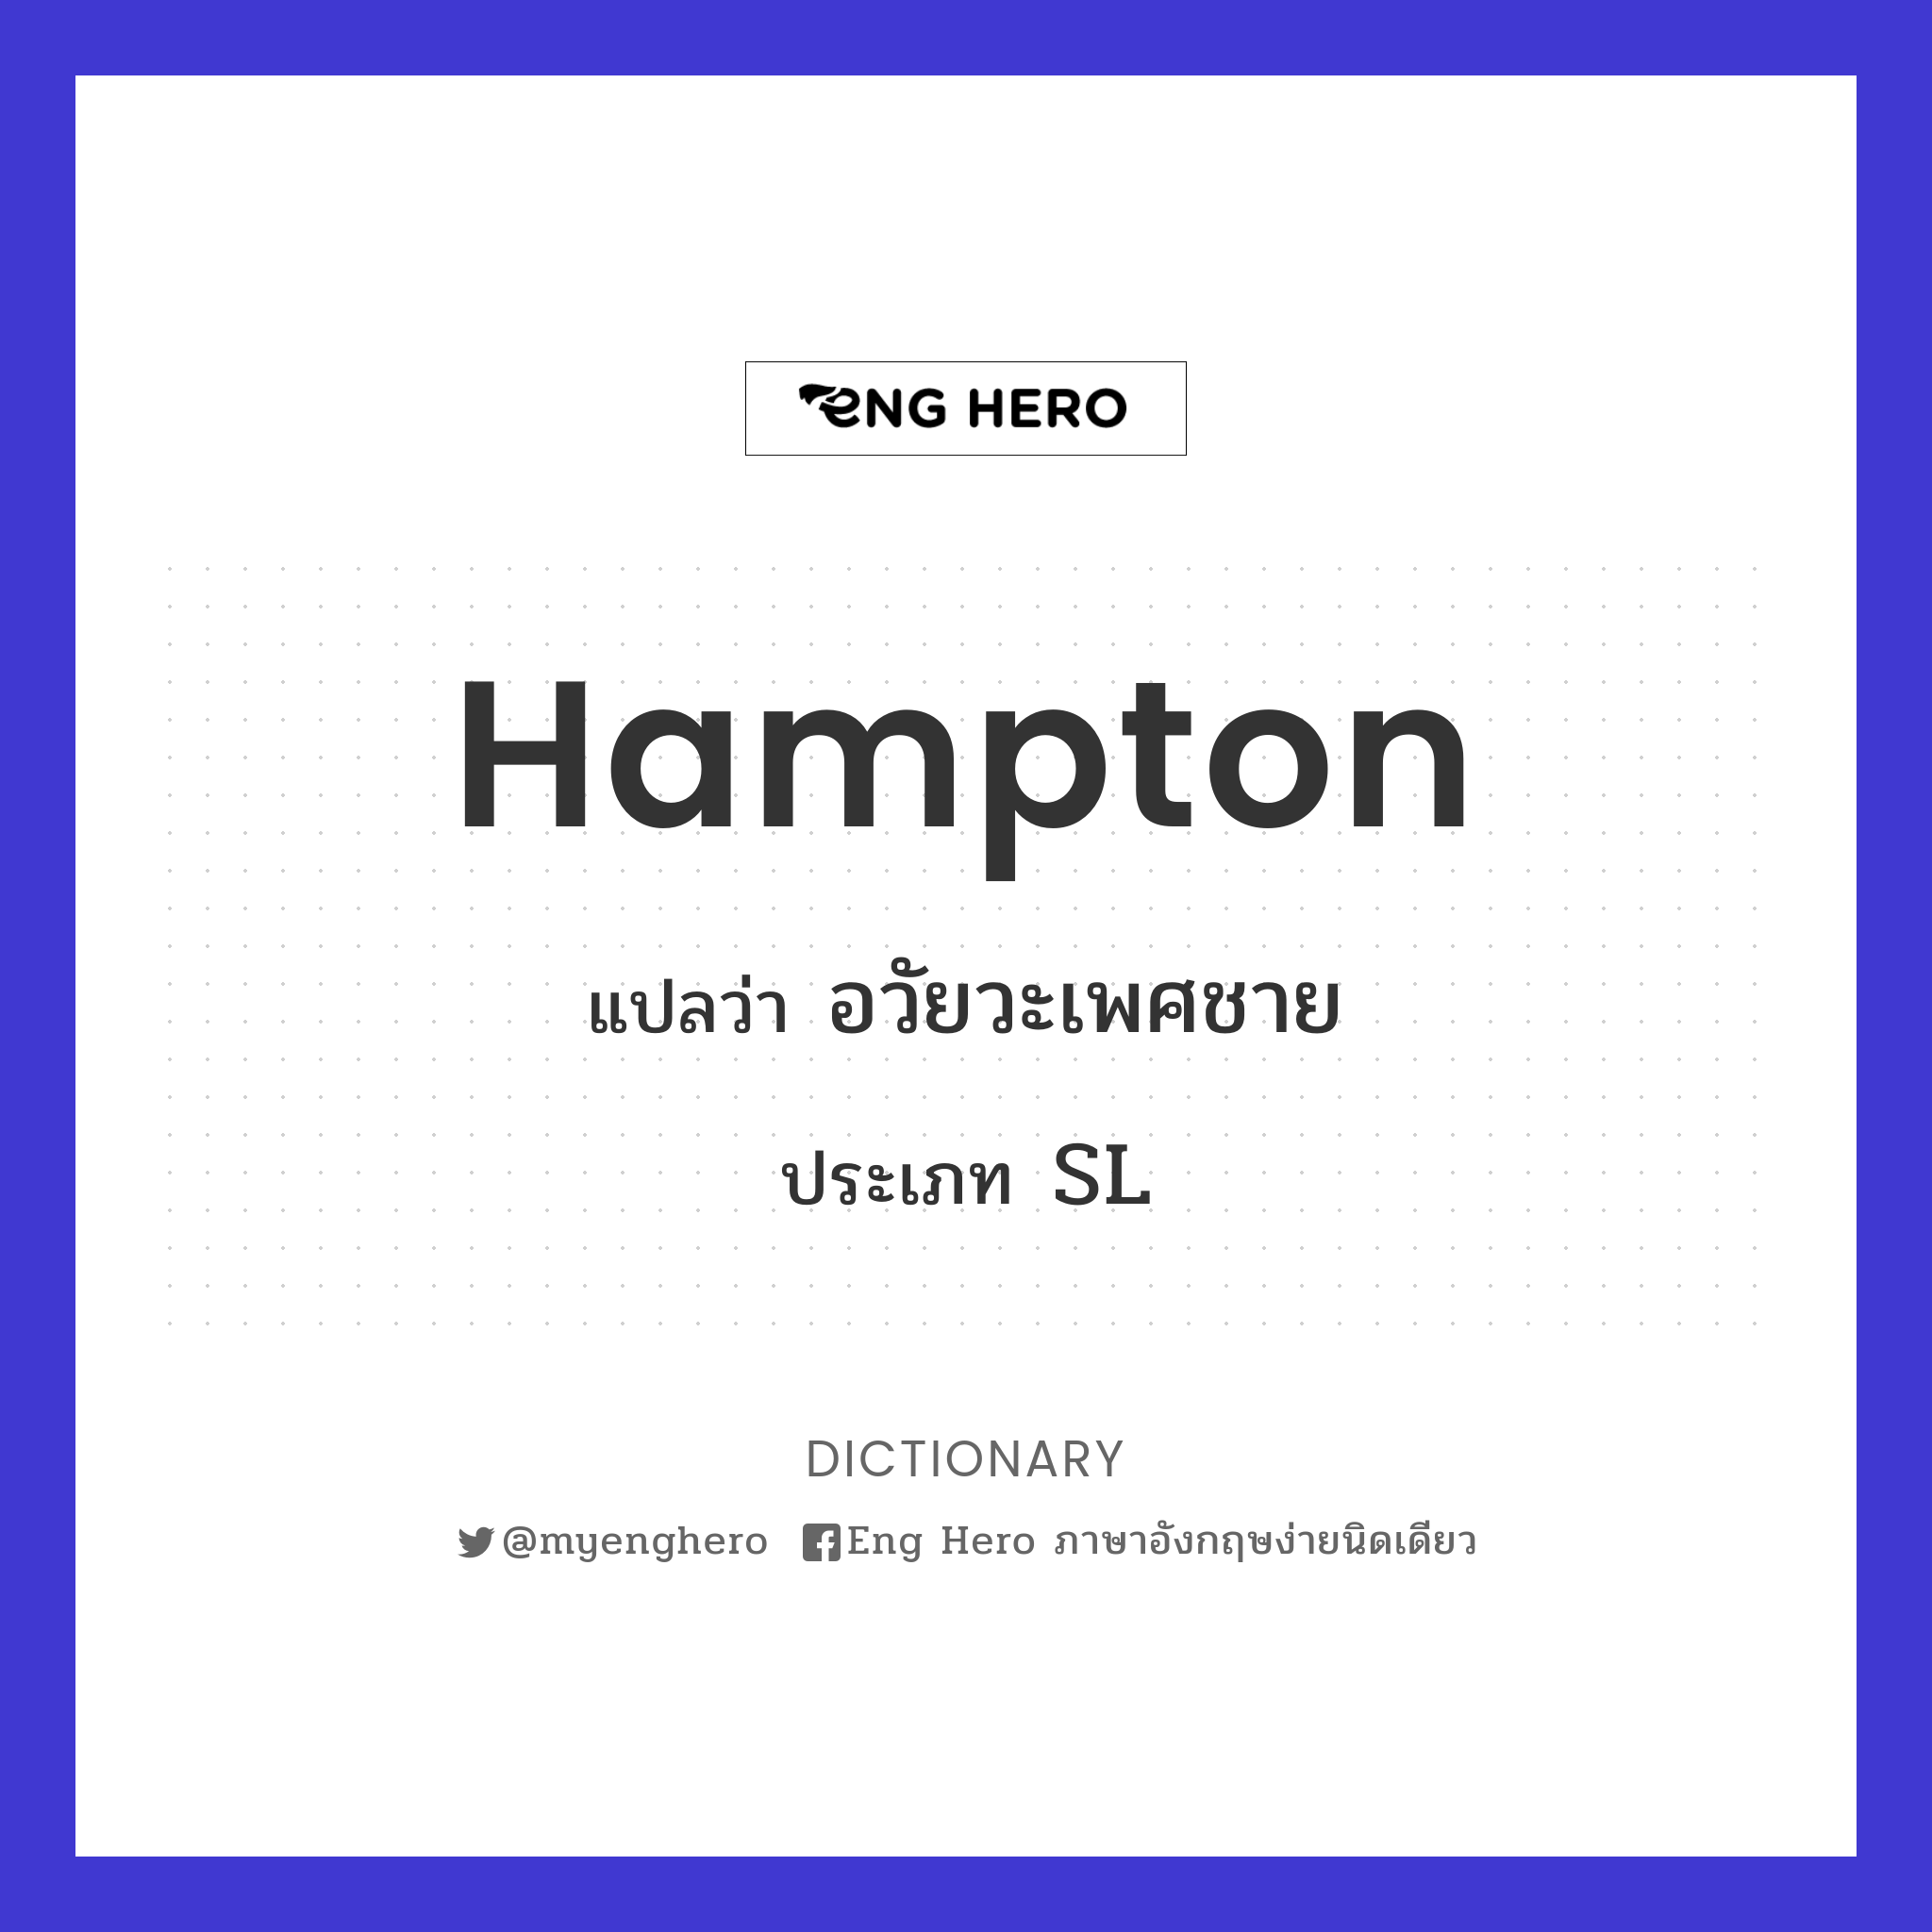 hampton